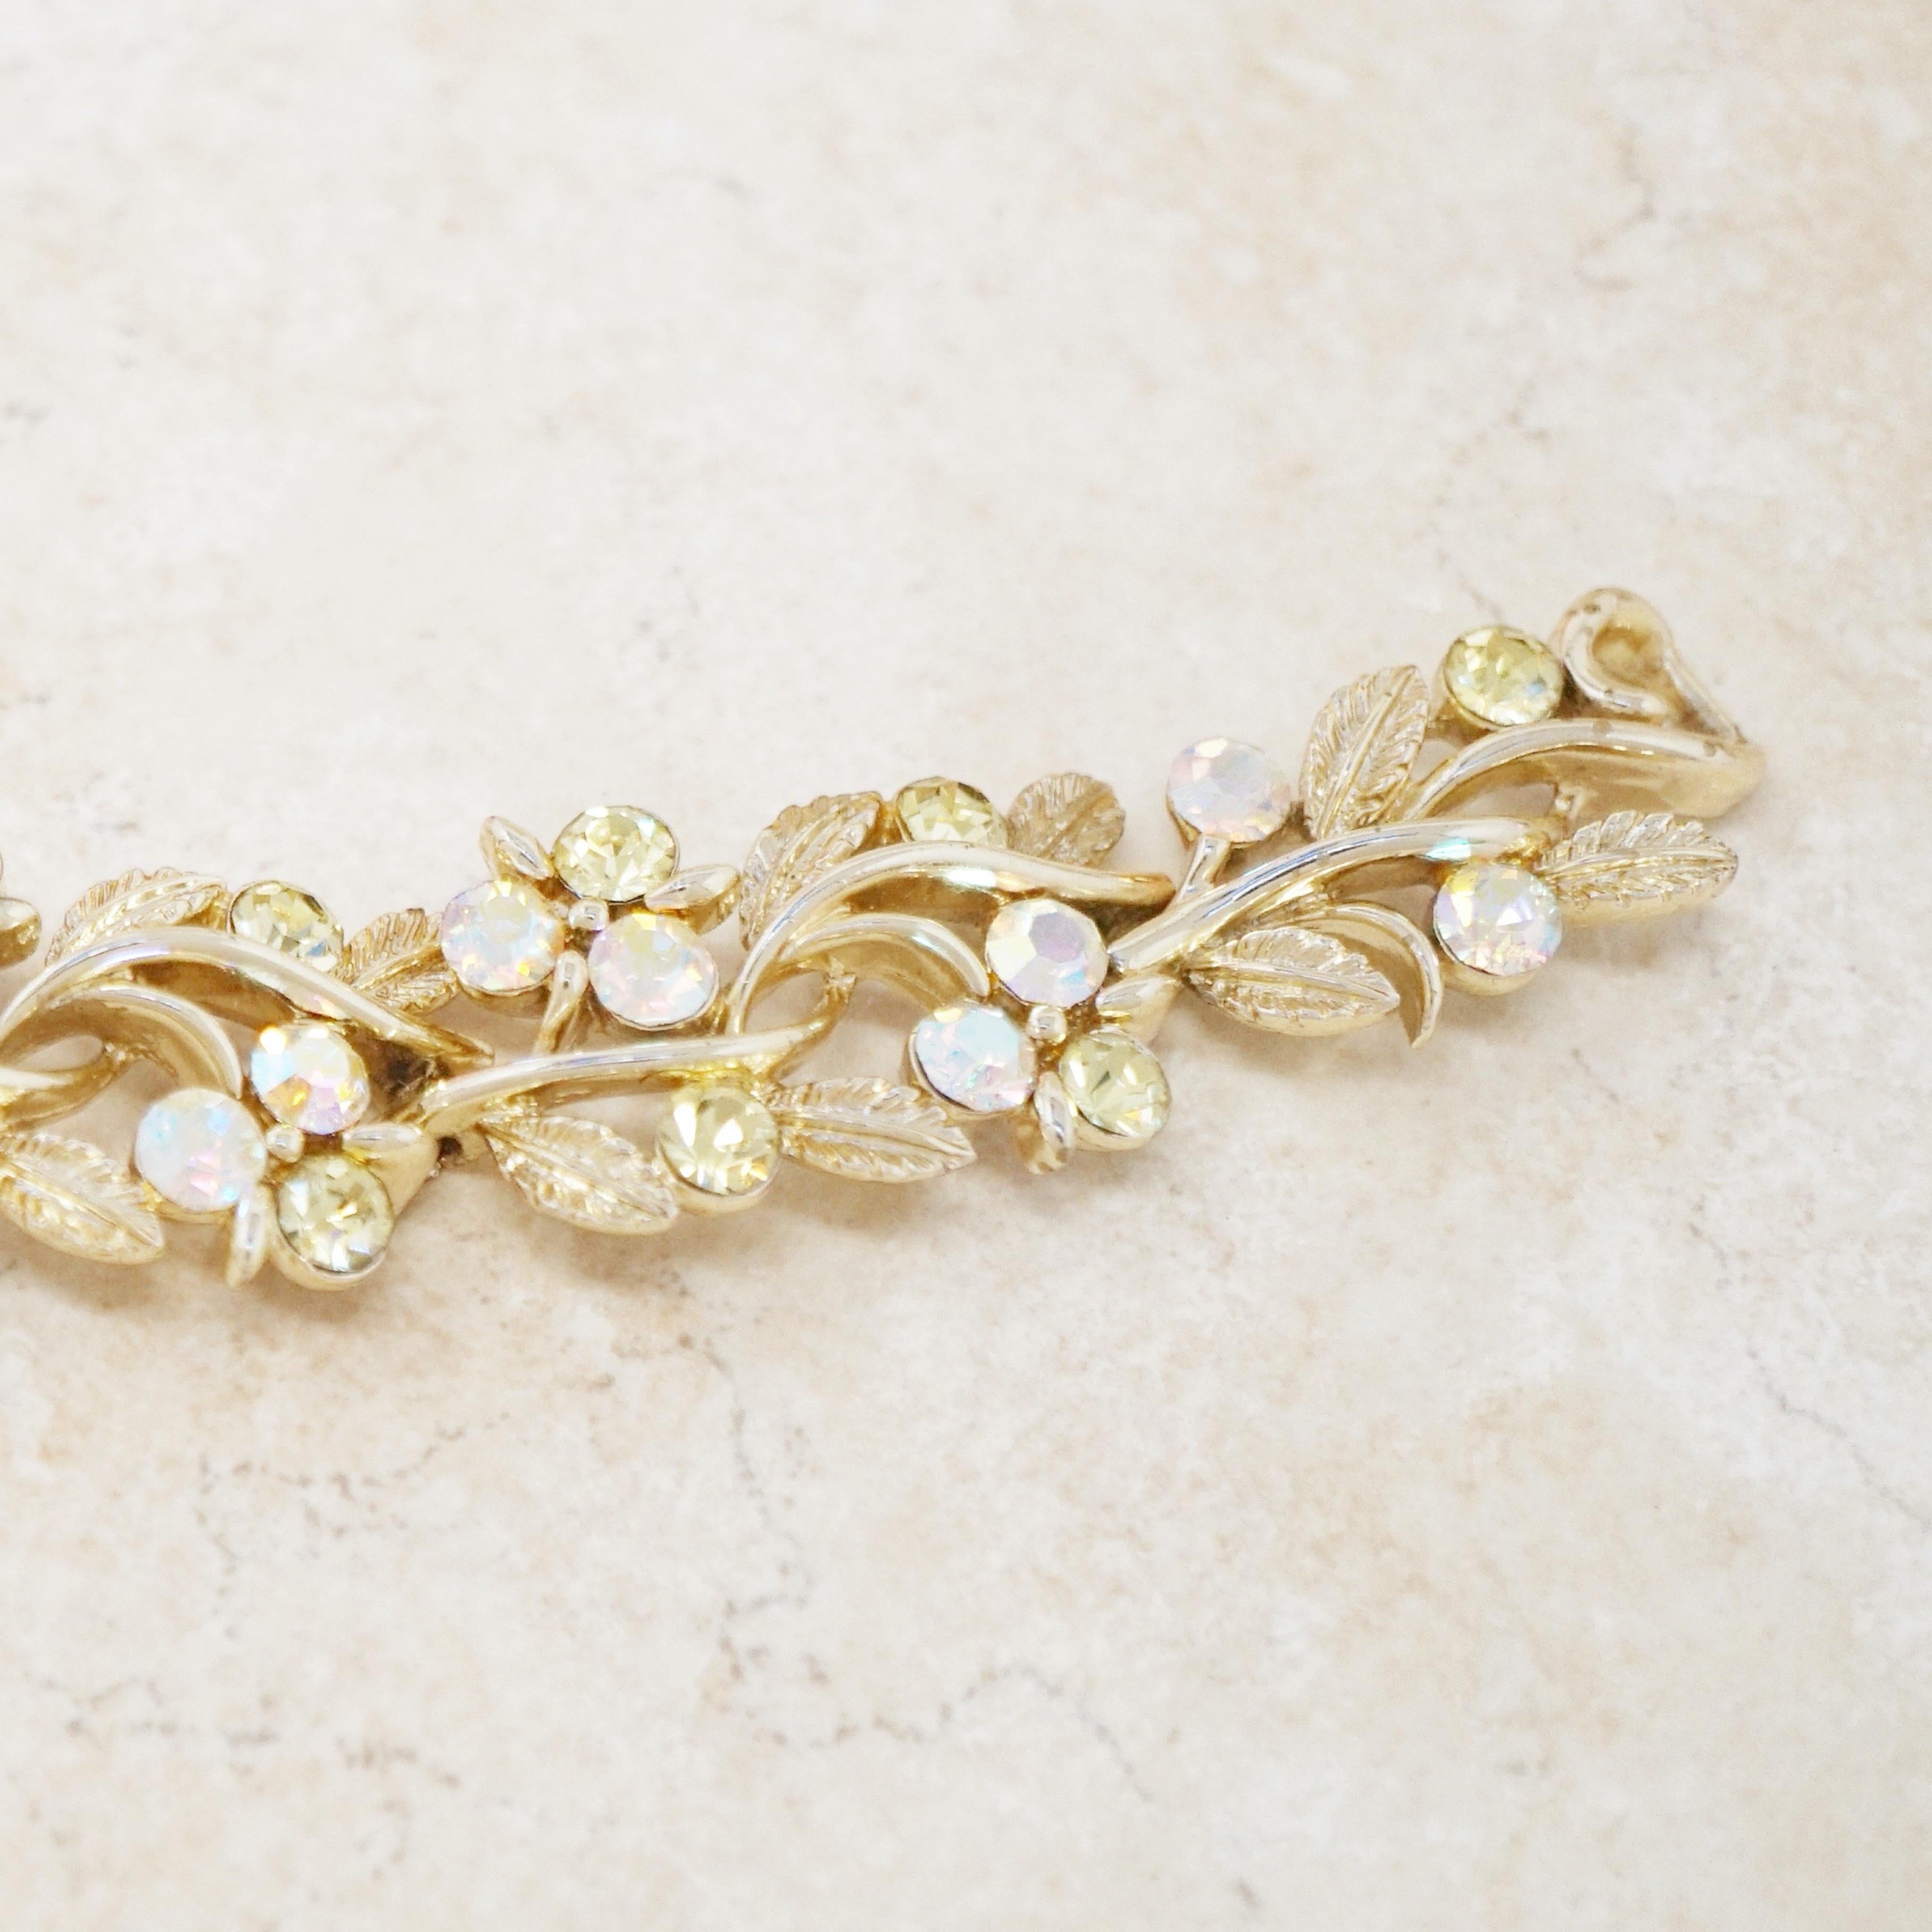 Modern Vintage Gilded Leaves Bracelet with Aurora Borealis Crystals by Lisner, 1960s